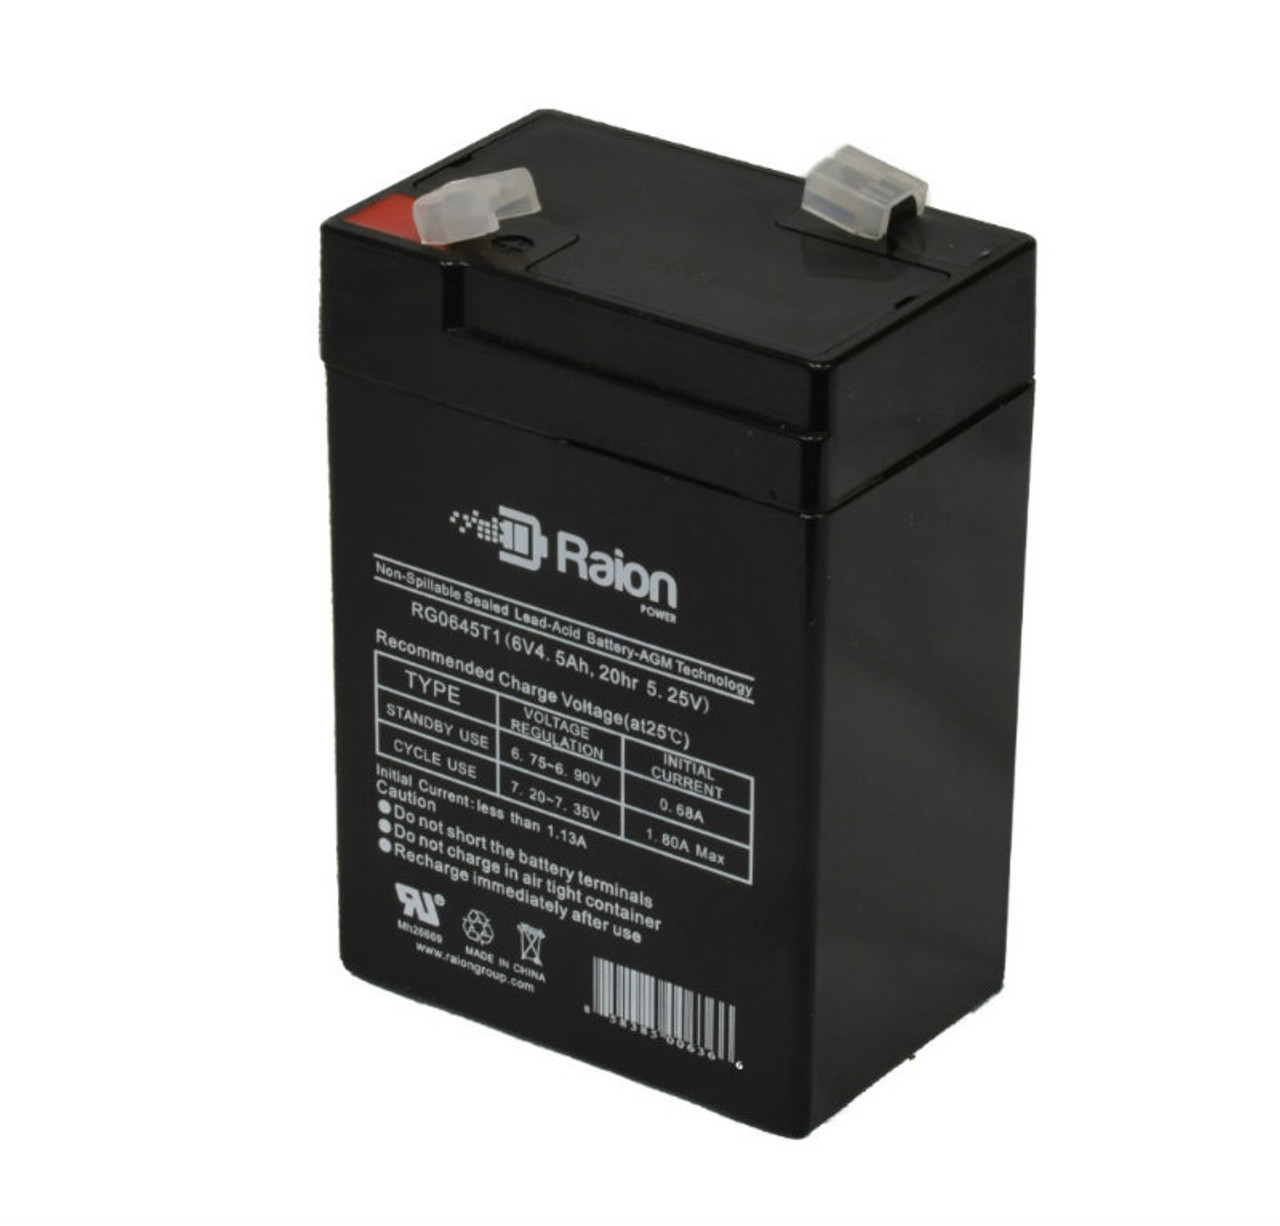 Raion Power RG0645T1 6V 4.5Ah Replacement Battery Cartridge for Teledyne WINDSOR